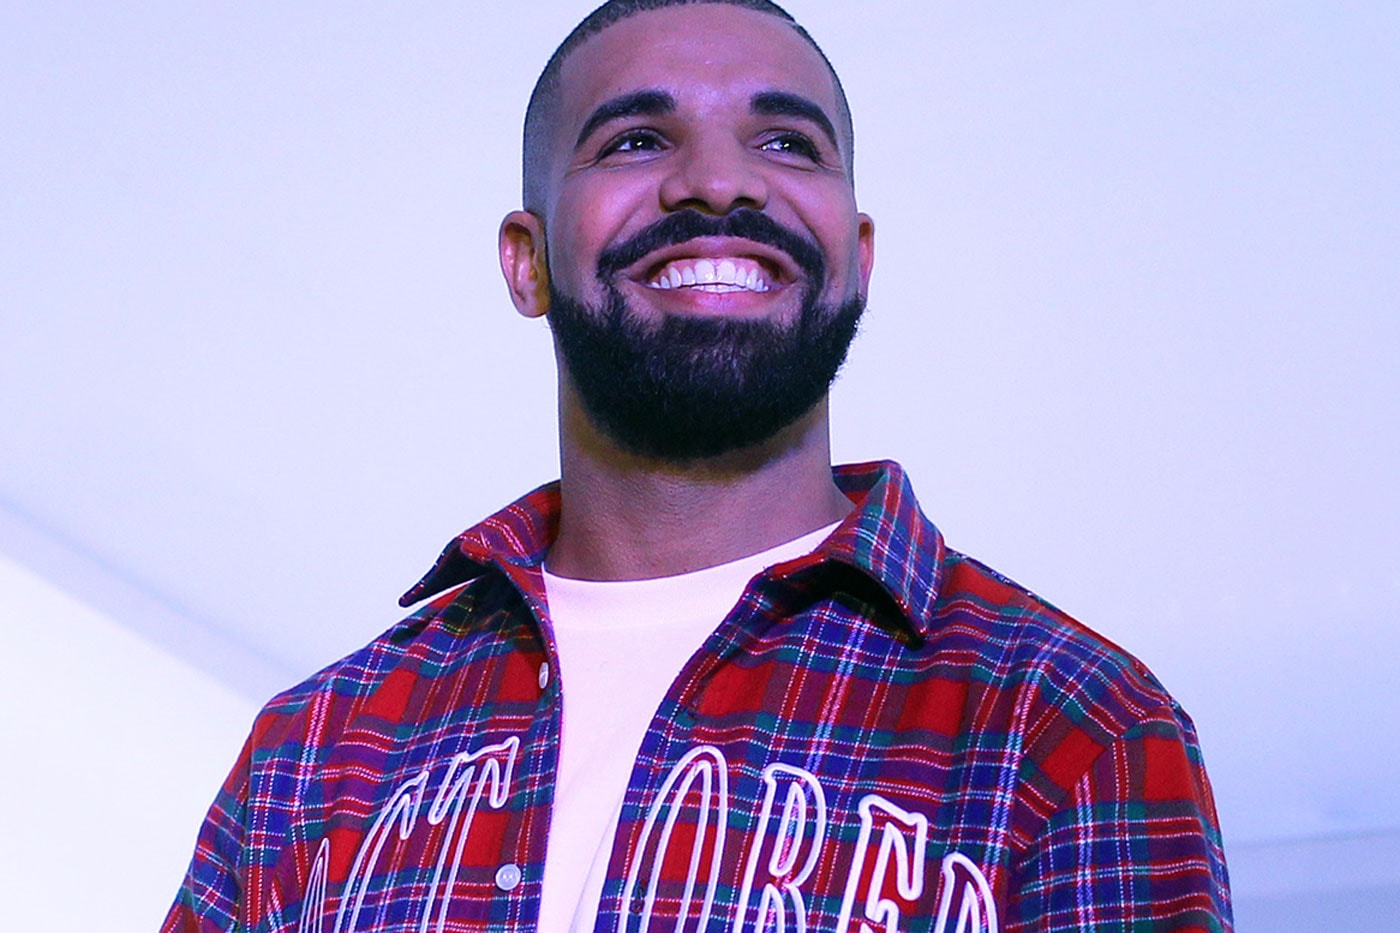 Here Are Memes From Drake's "Hotline Bling" Video